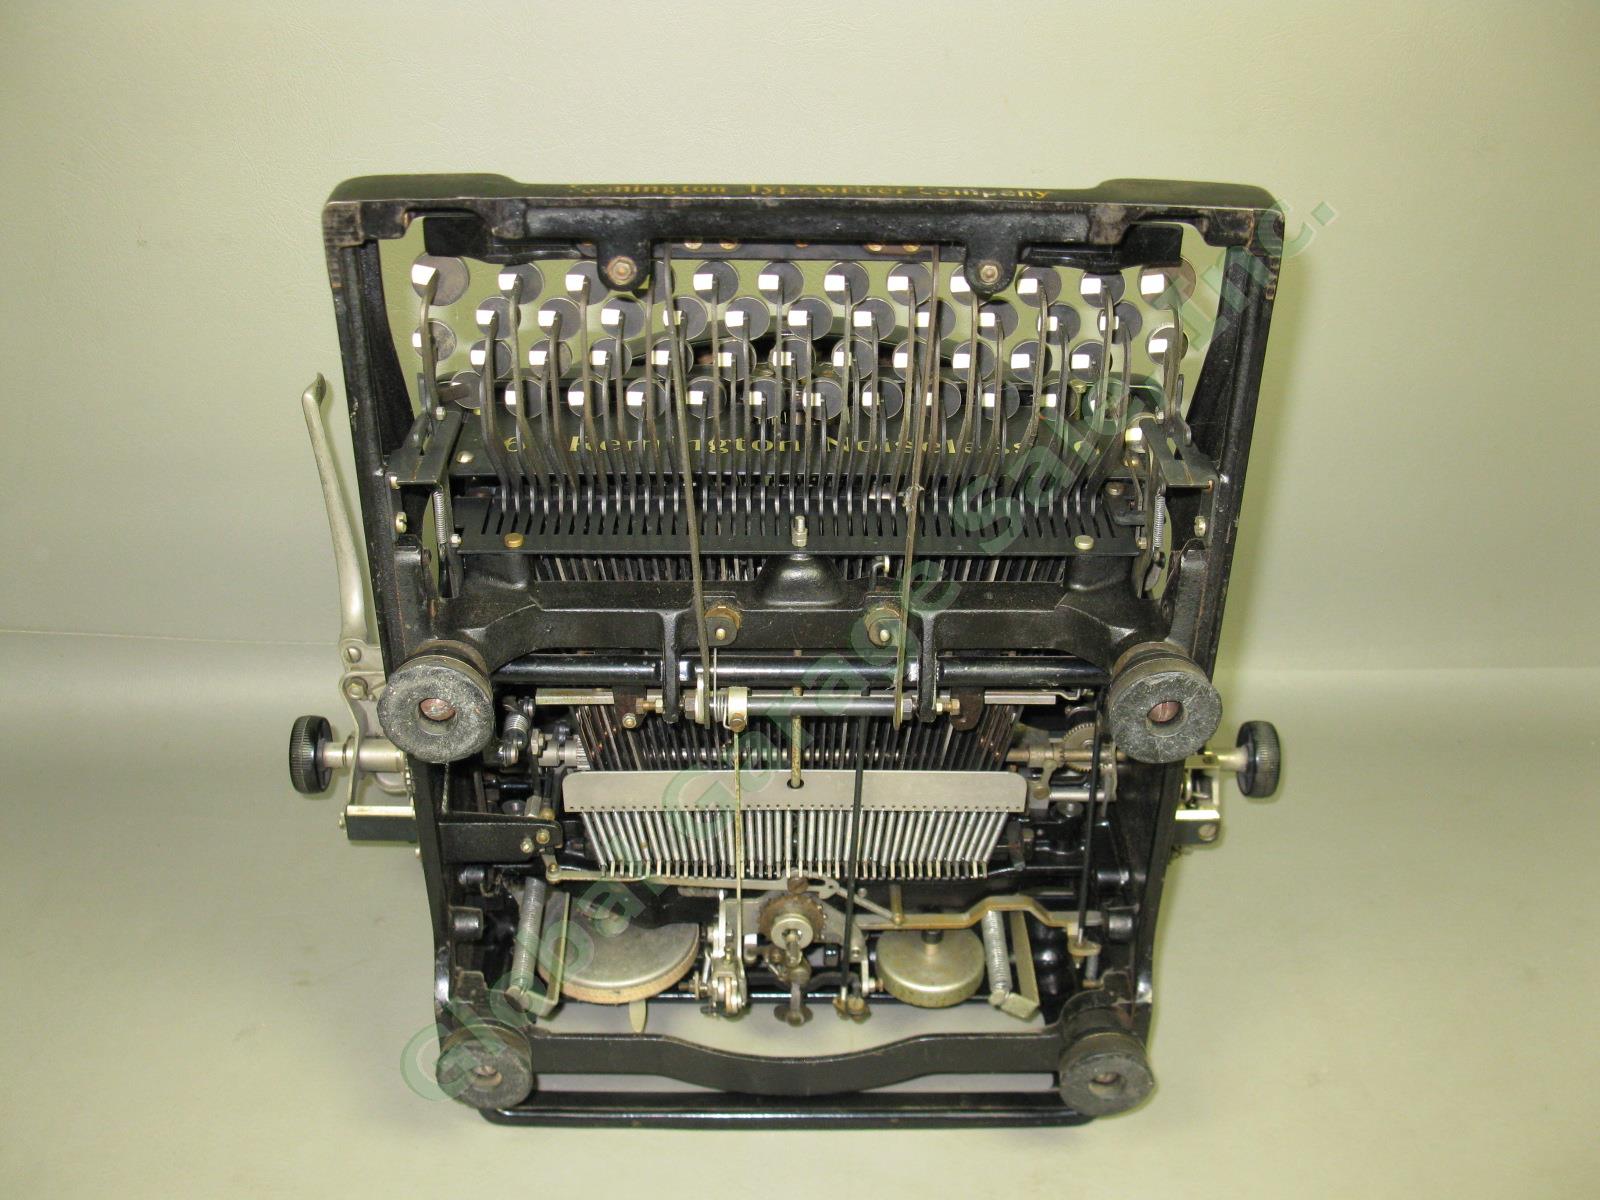 Vtg Antique 1929 Remington Noiseless 6 Manual Typewriter Serial X117909 Cleaned 9